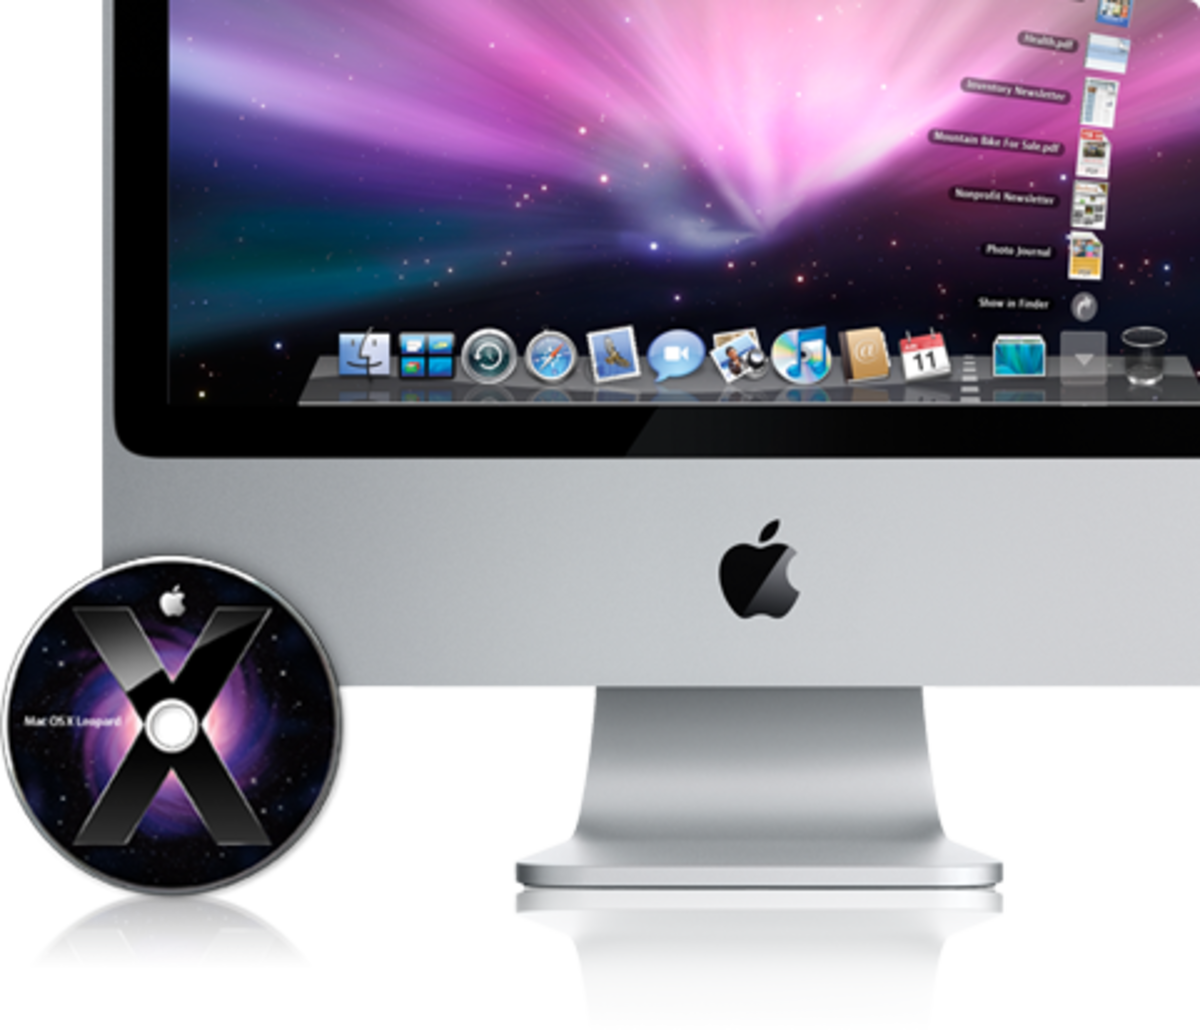 Mac Os X 10.6.0 Apple